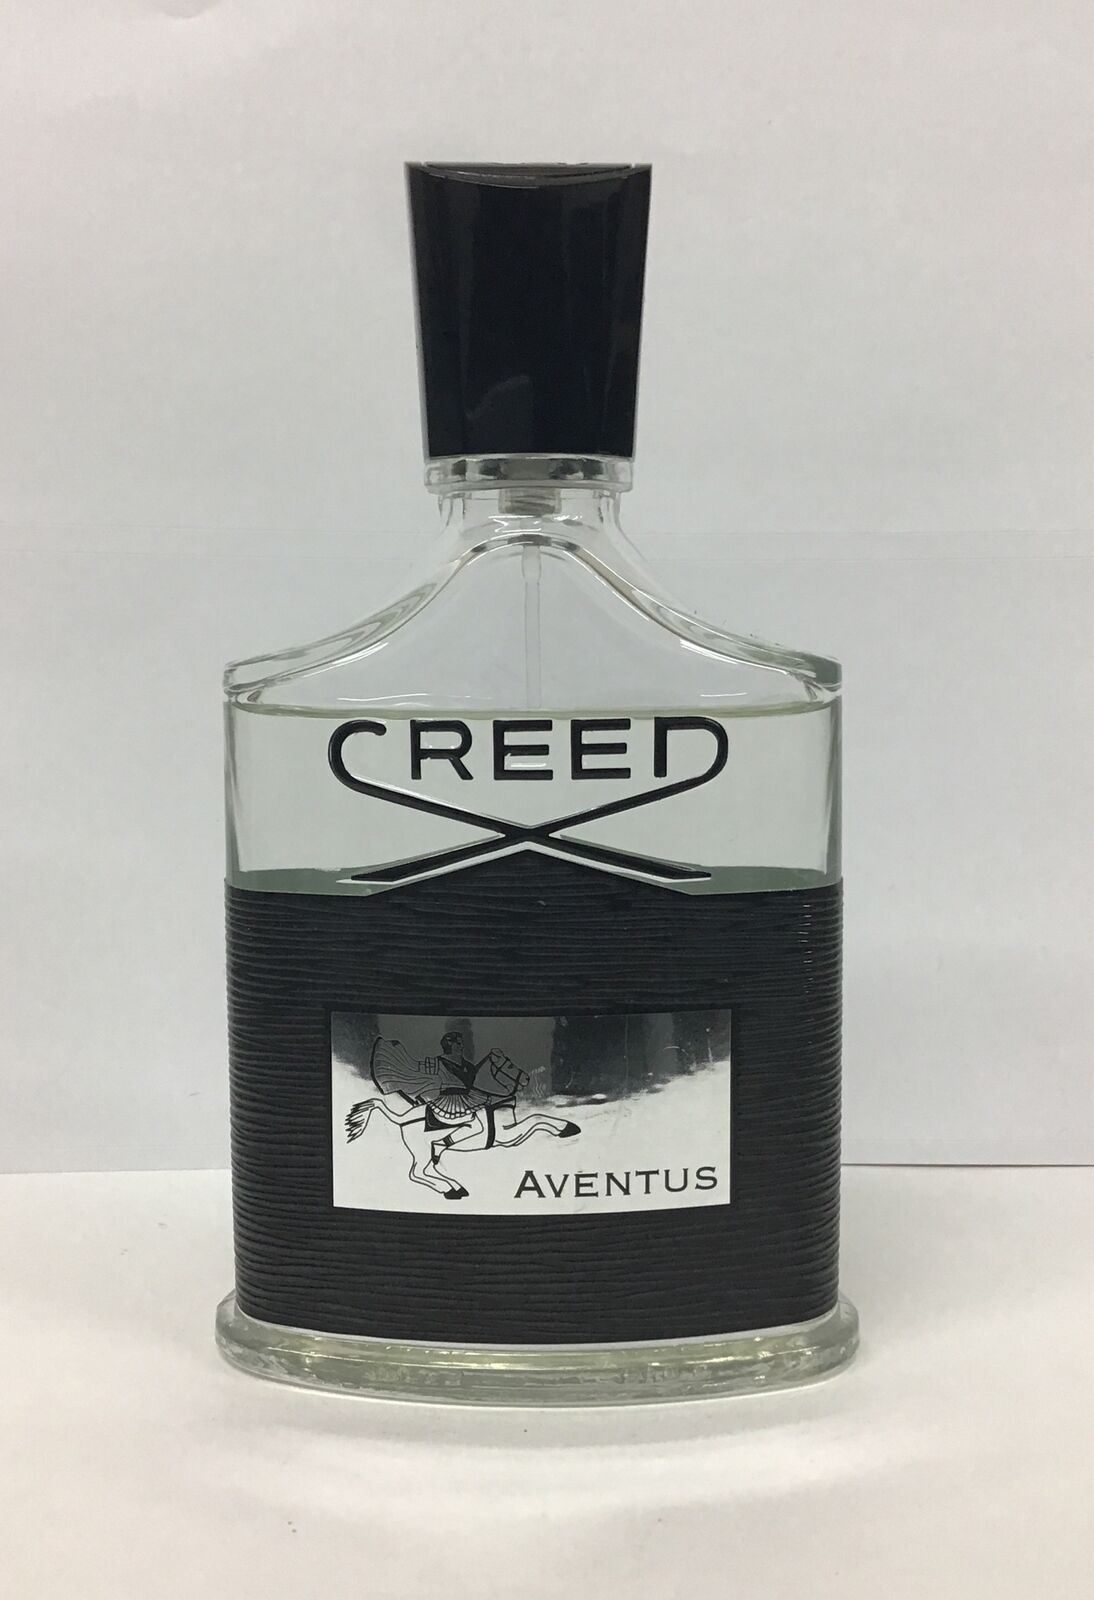 Creed Aventus Eau De Parfum Spray 3.33 Fl Oz/ 100 Ml, 90% Full As Pictured.